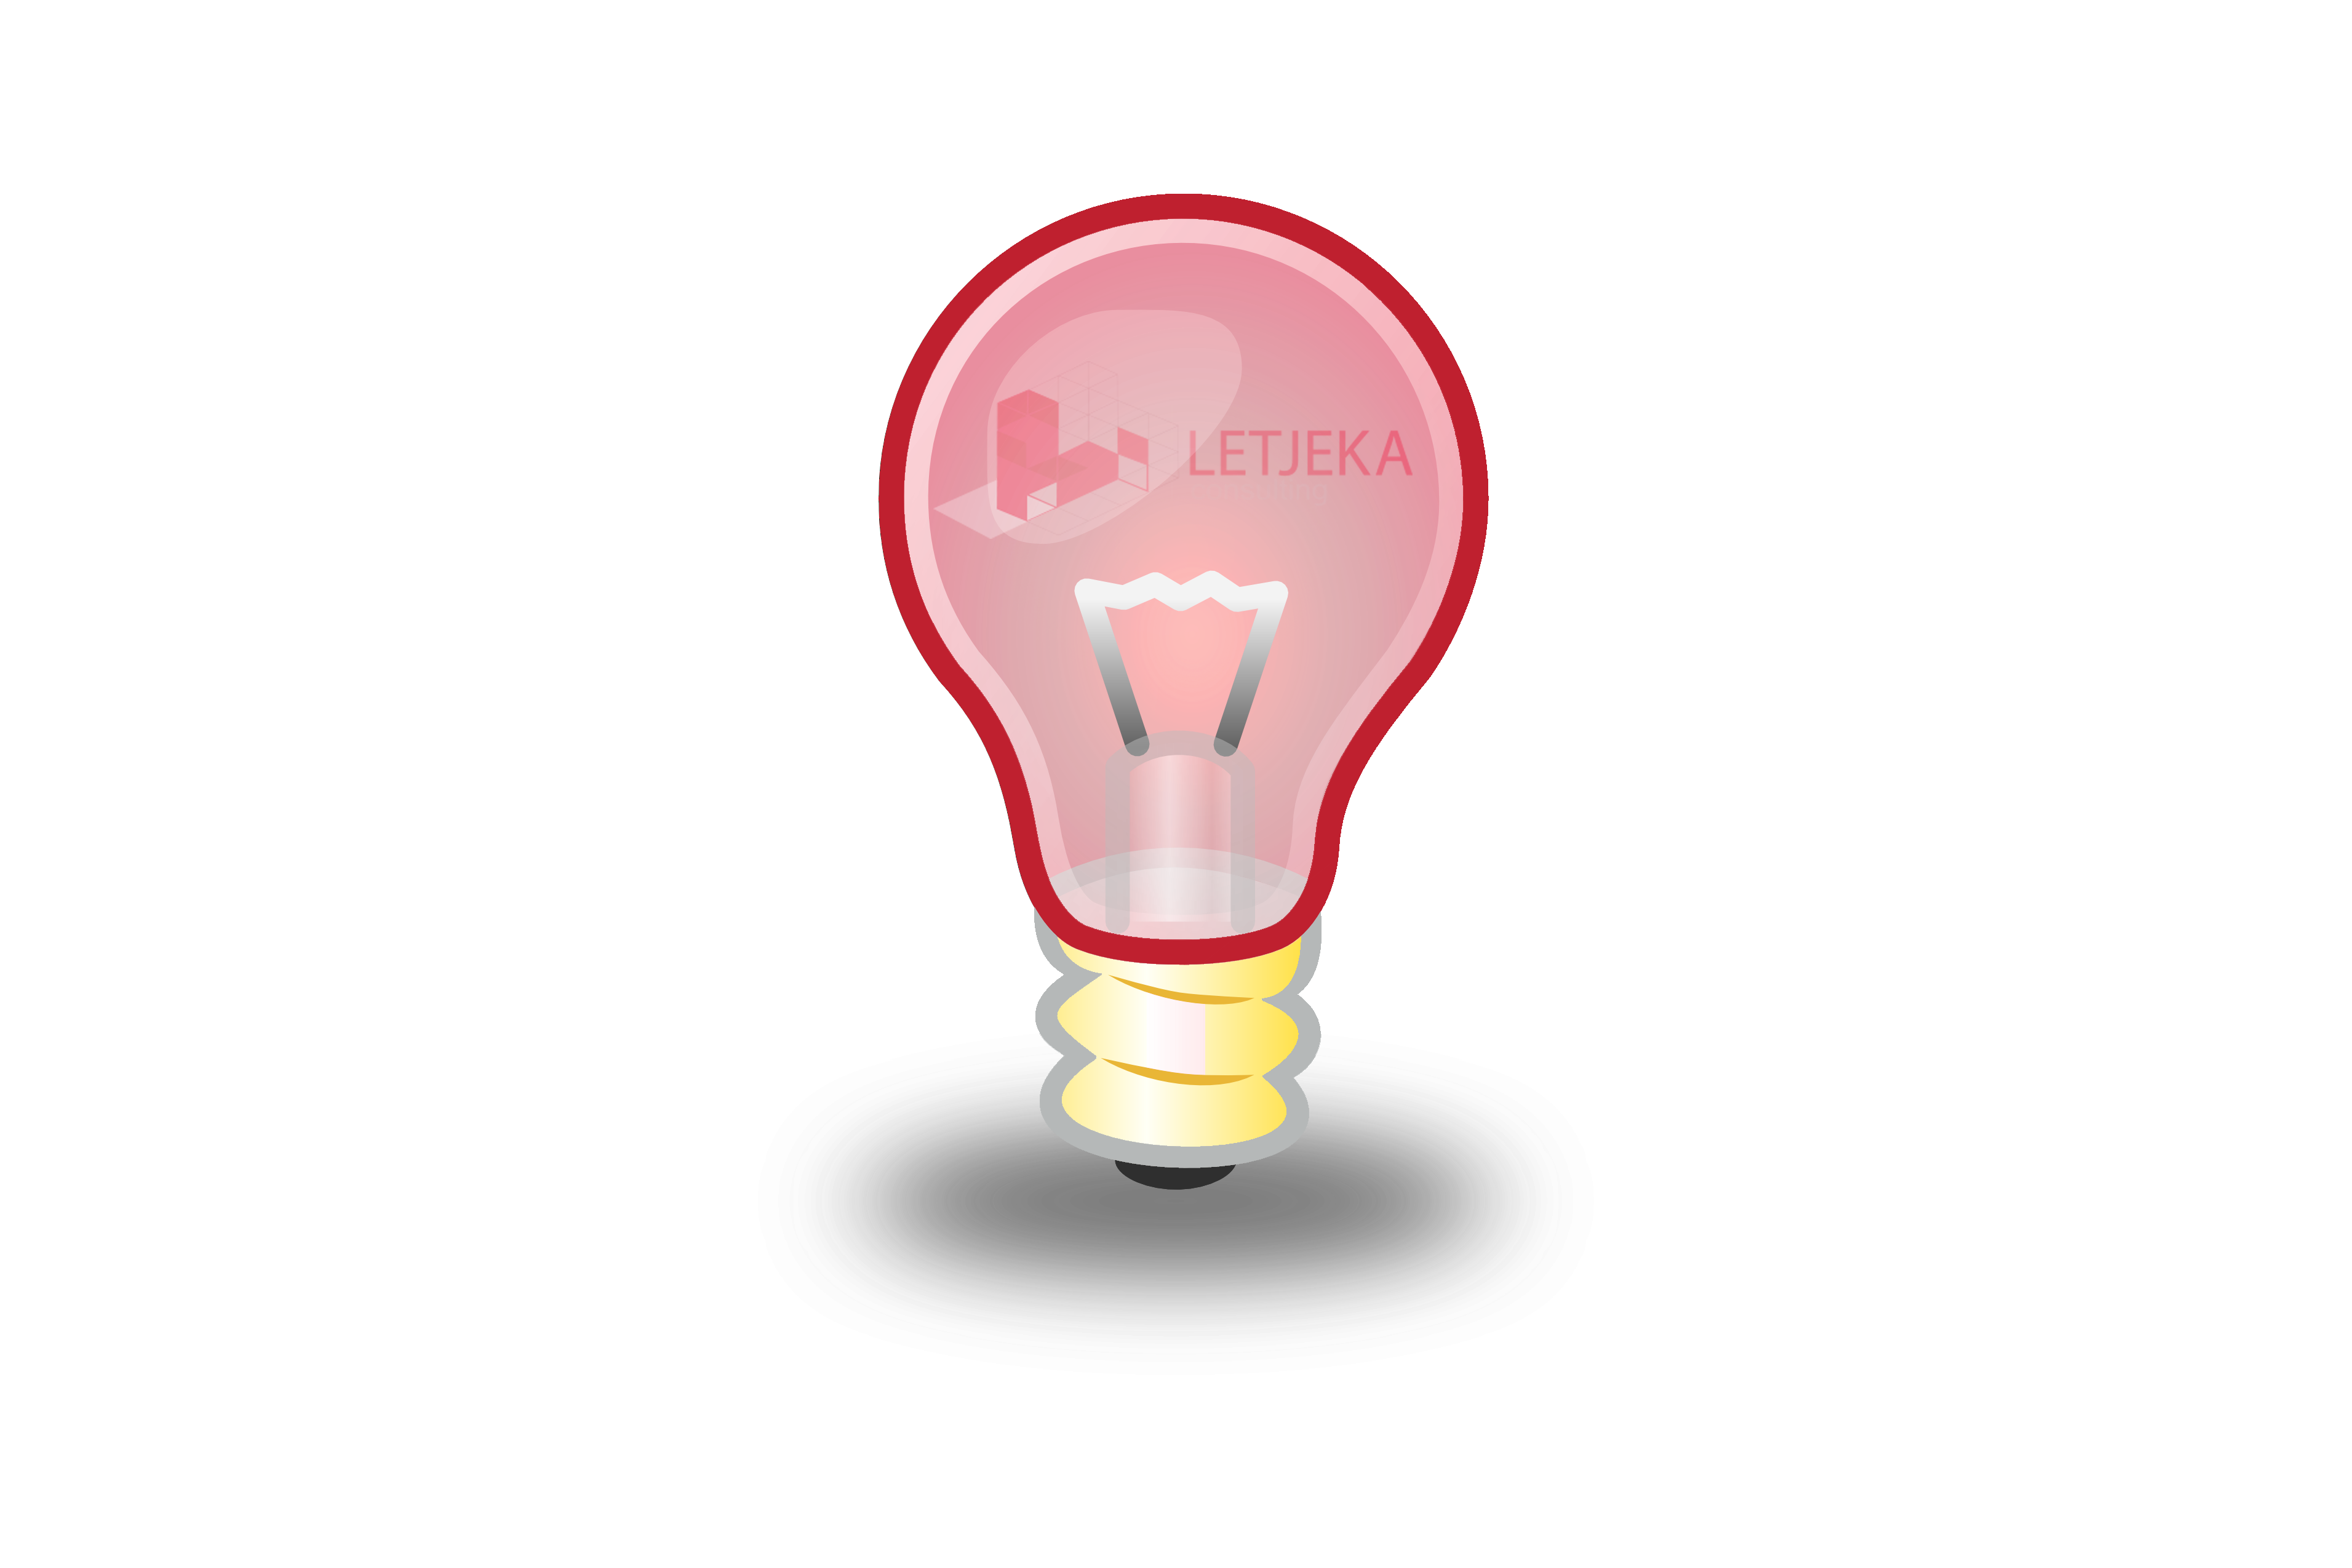 lightbulb clipart project objective